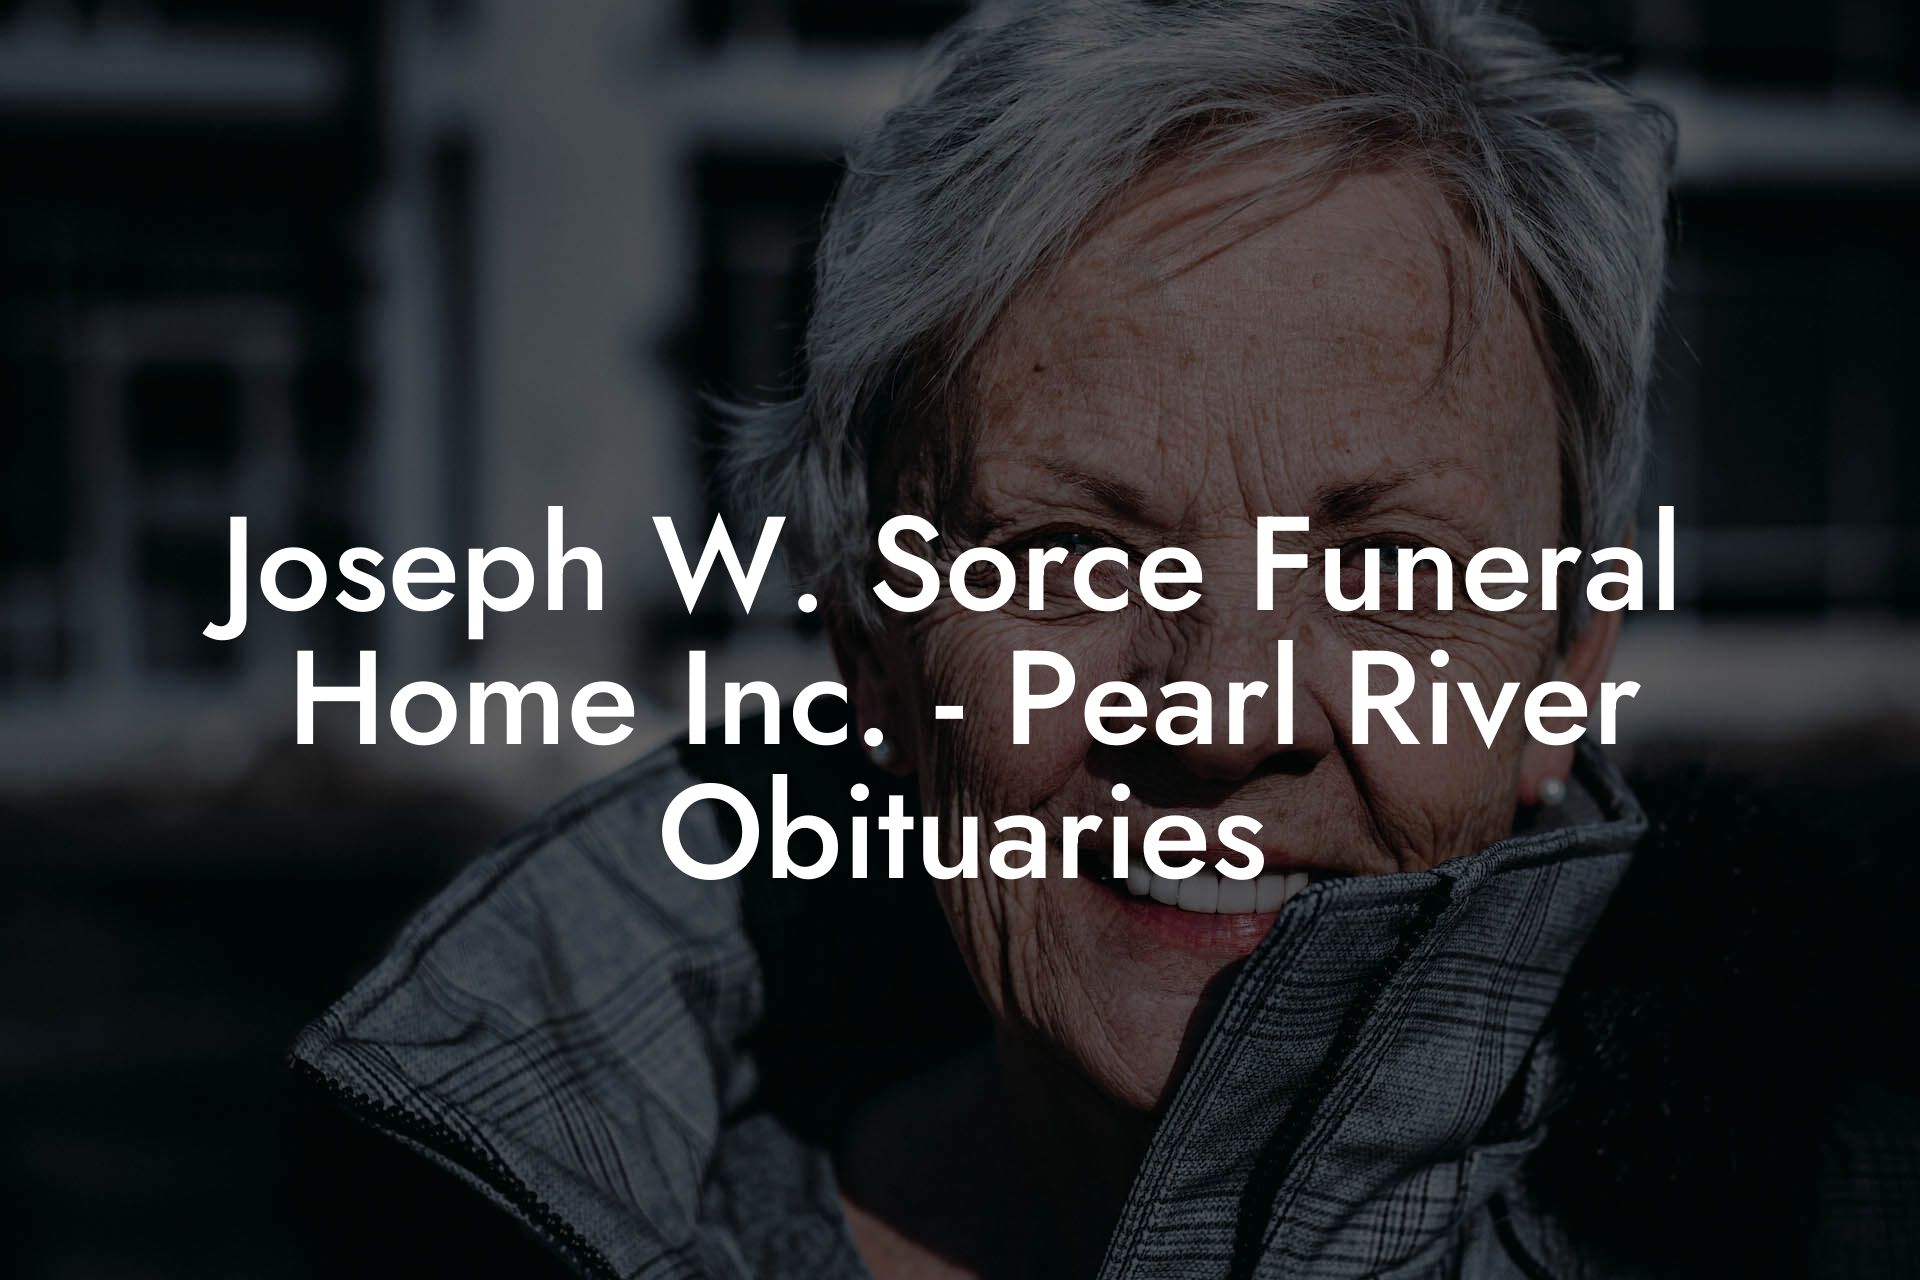 Joseph W. Sorce Funeral Home Inc - Pearl River Obituaries